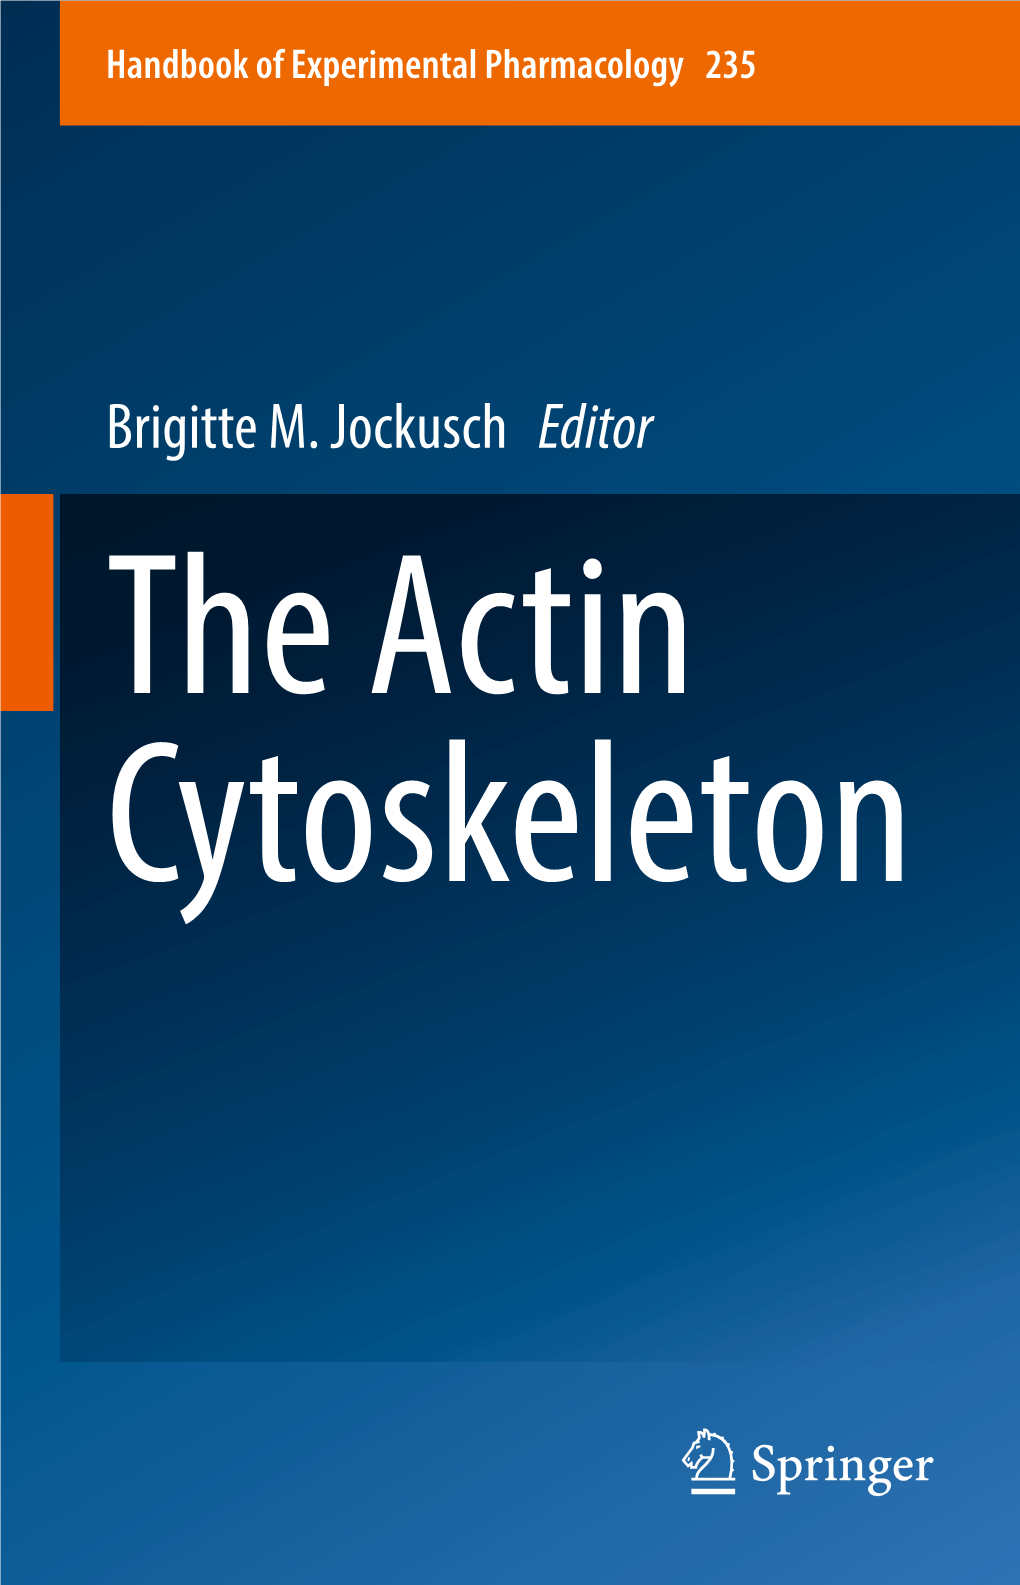 Brigitte M. Jockusch Editor the Actin Cytoskeleton Handbook of Experimental Pharmacology